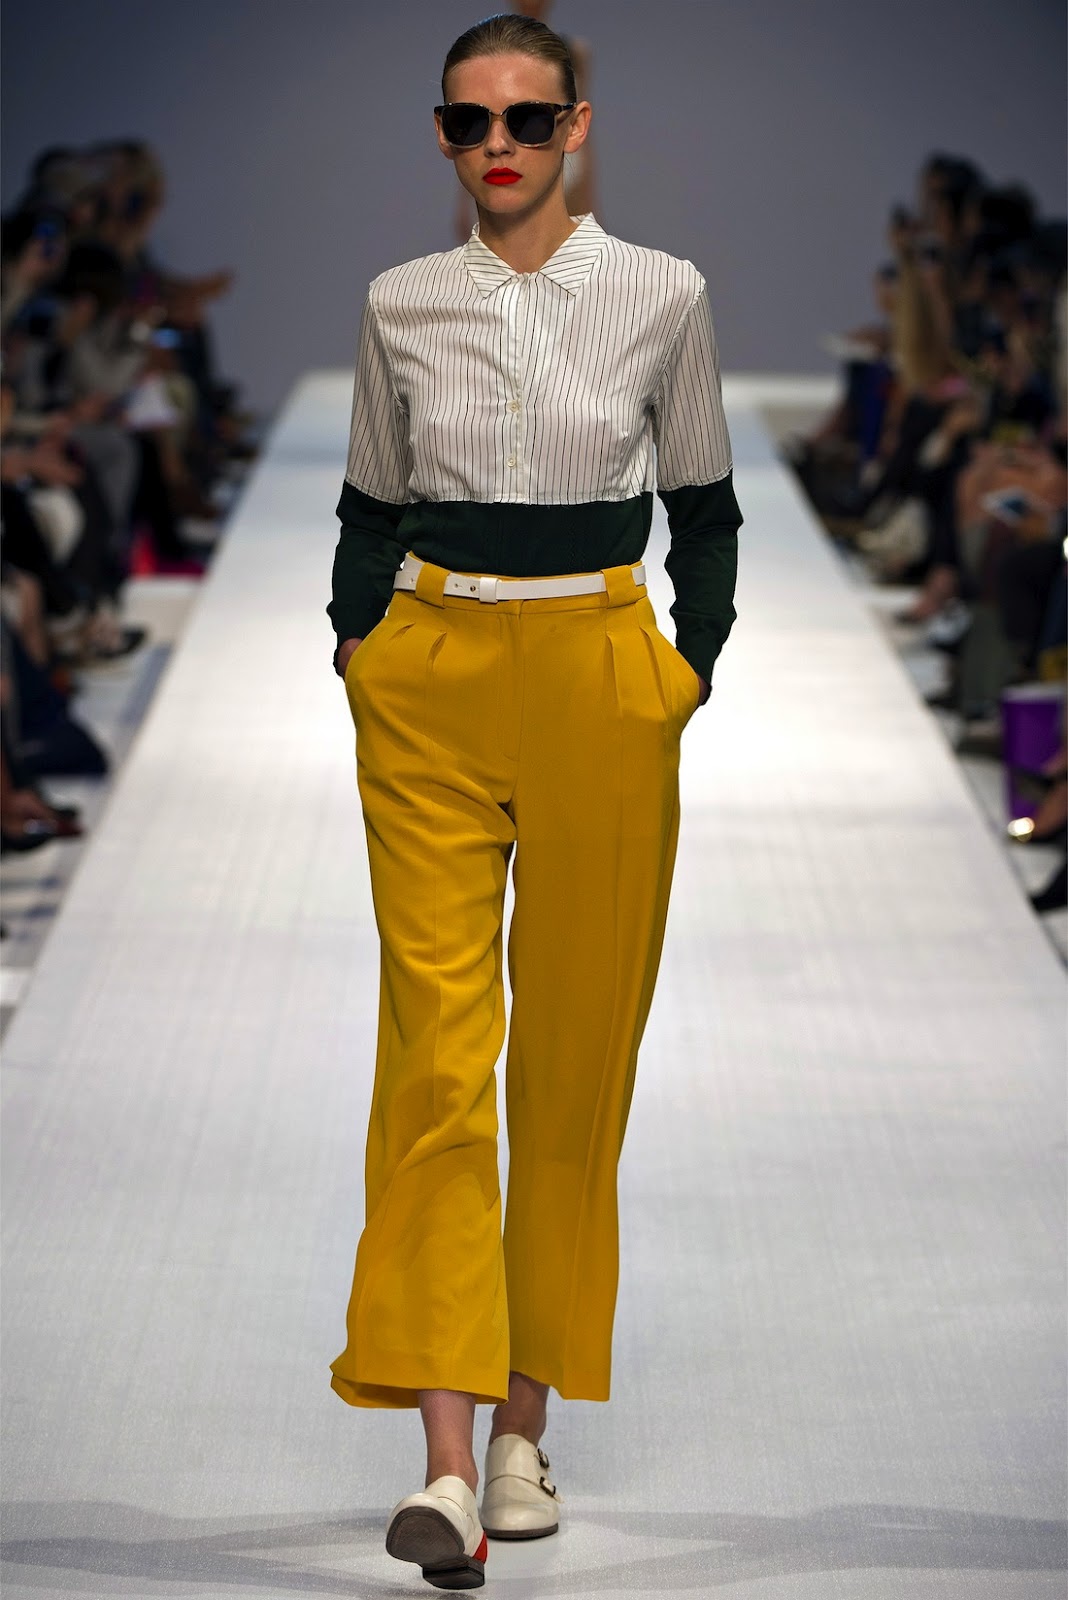 paul smith s/s 13 london | visual optimism; fashion editorials, shows ...